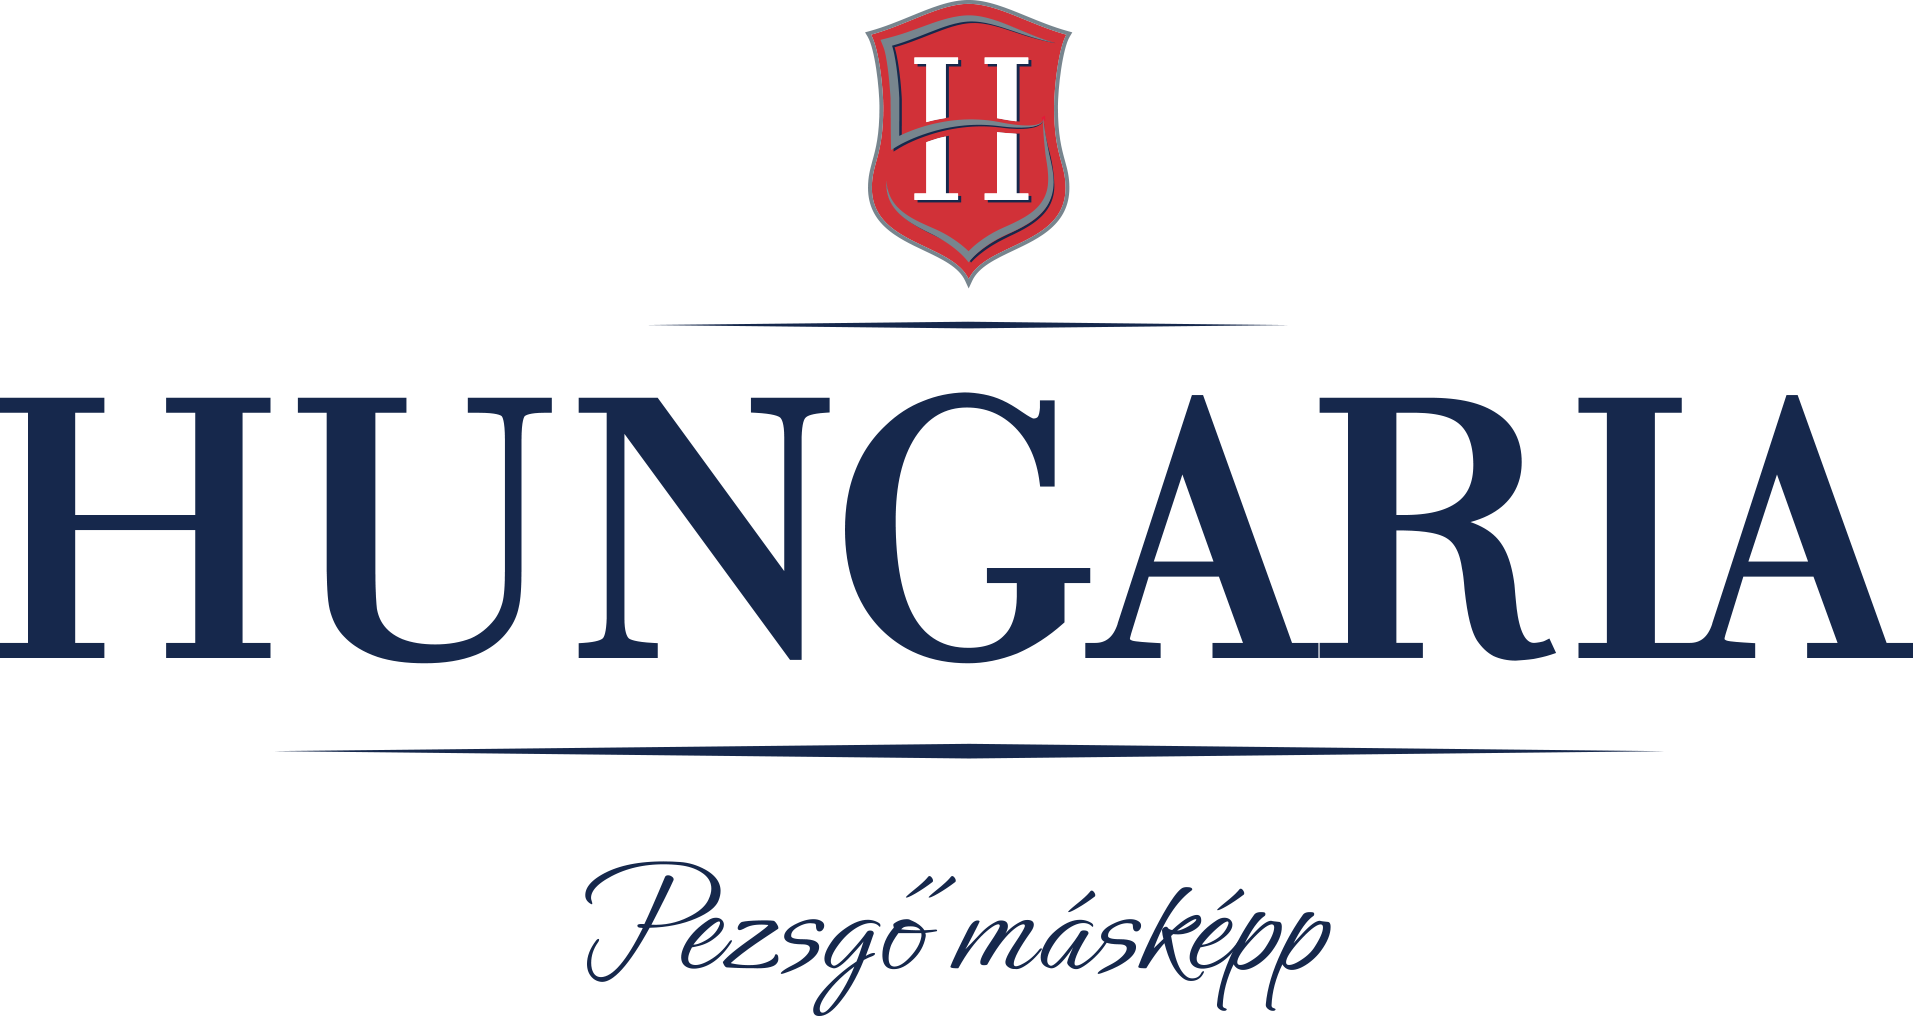 Hungaria. Хунгария. Hungaria прямоугольный. Магна Хунгария. Hungaria naxagah.